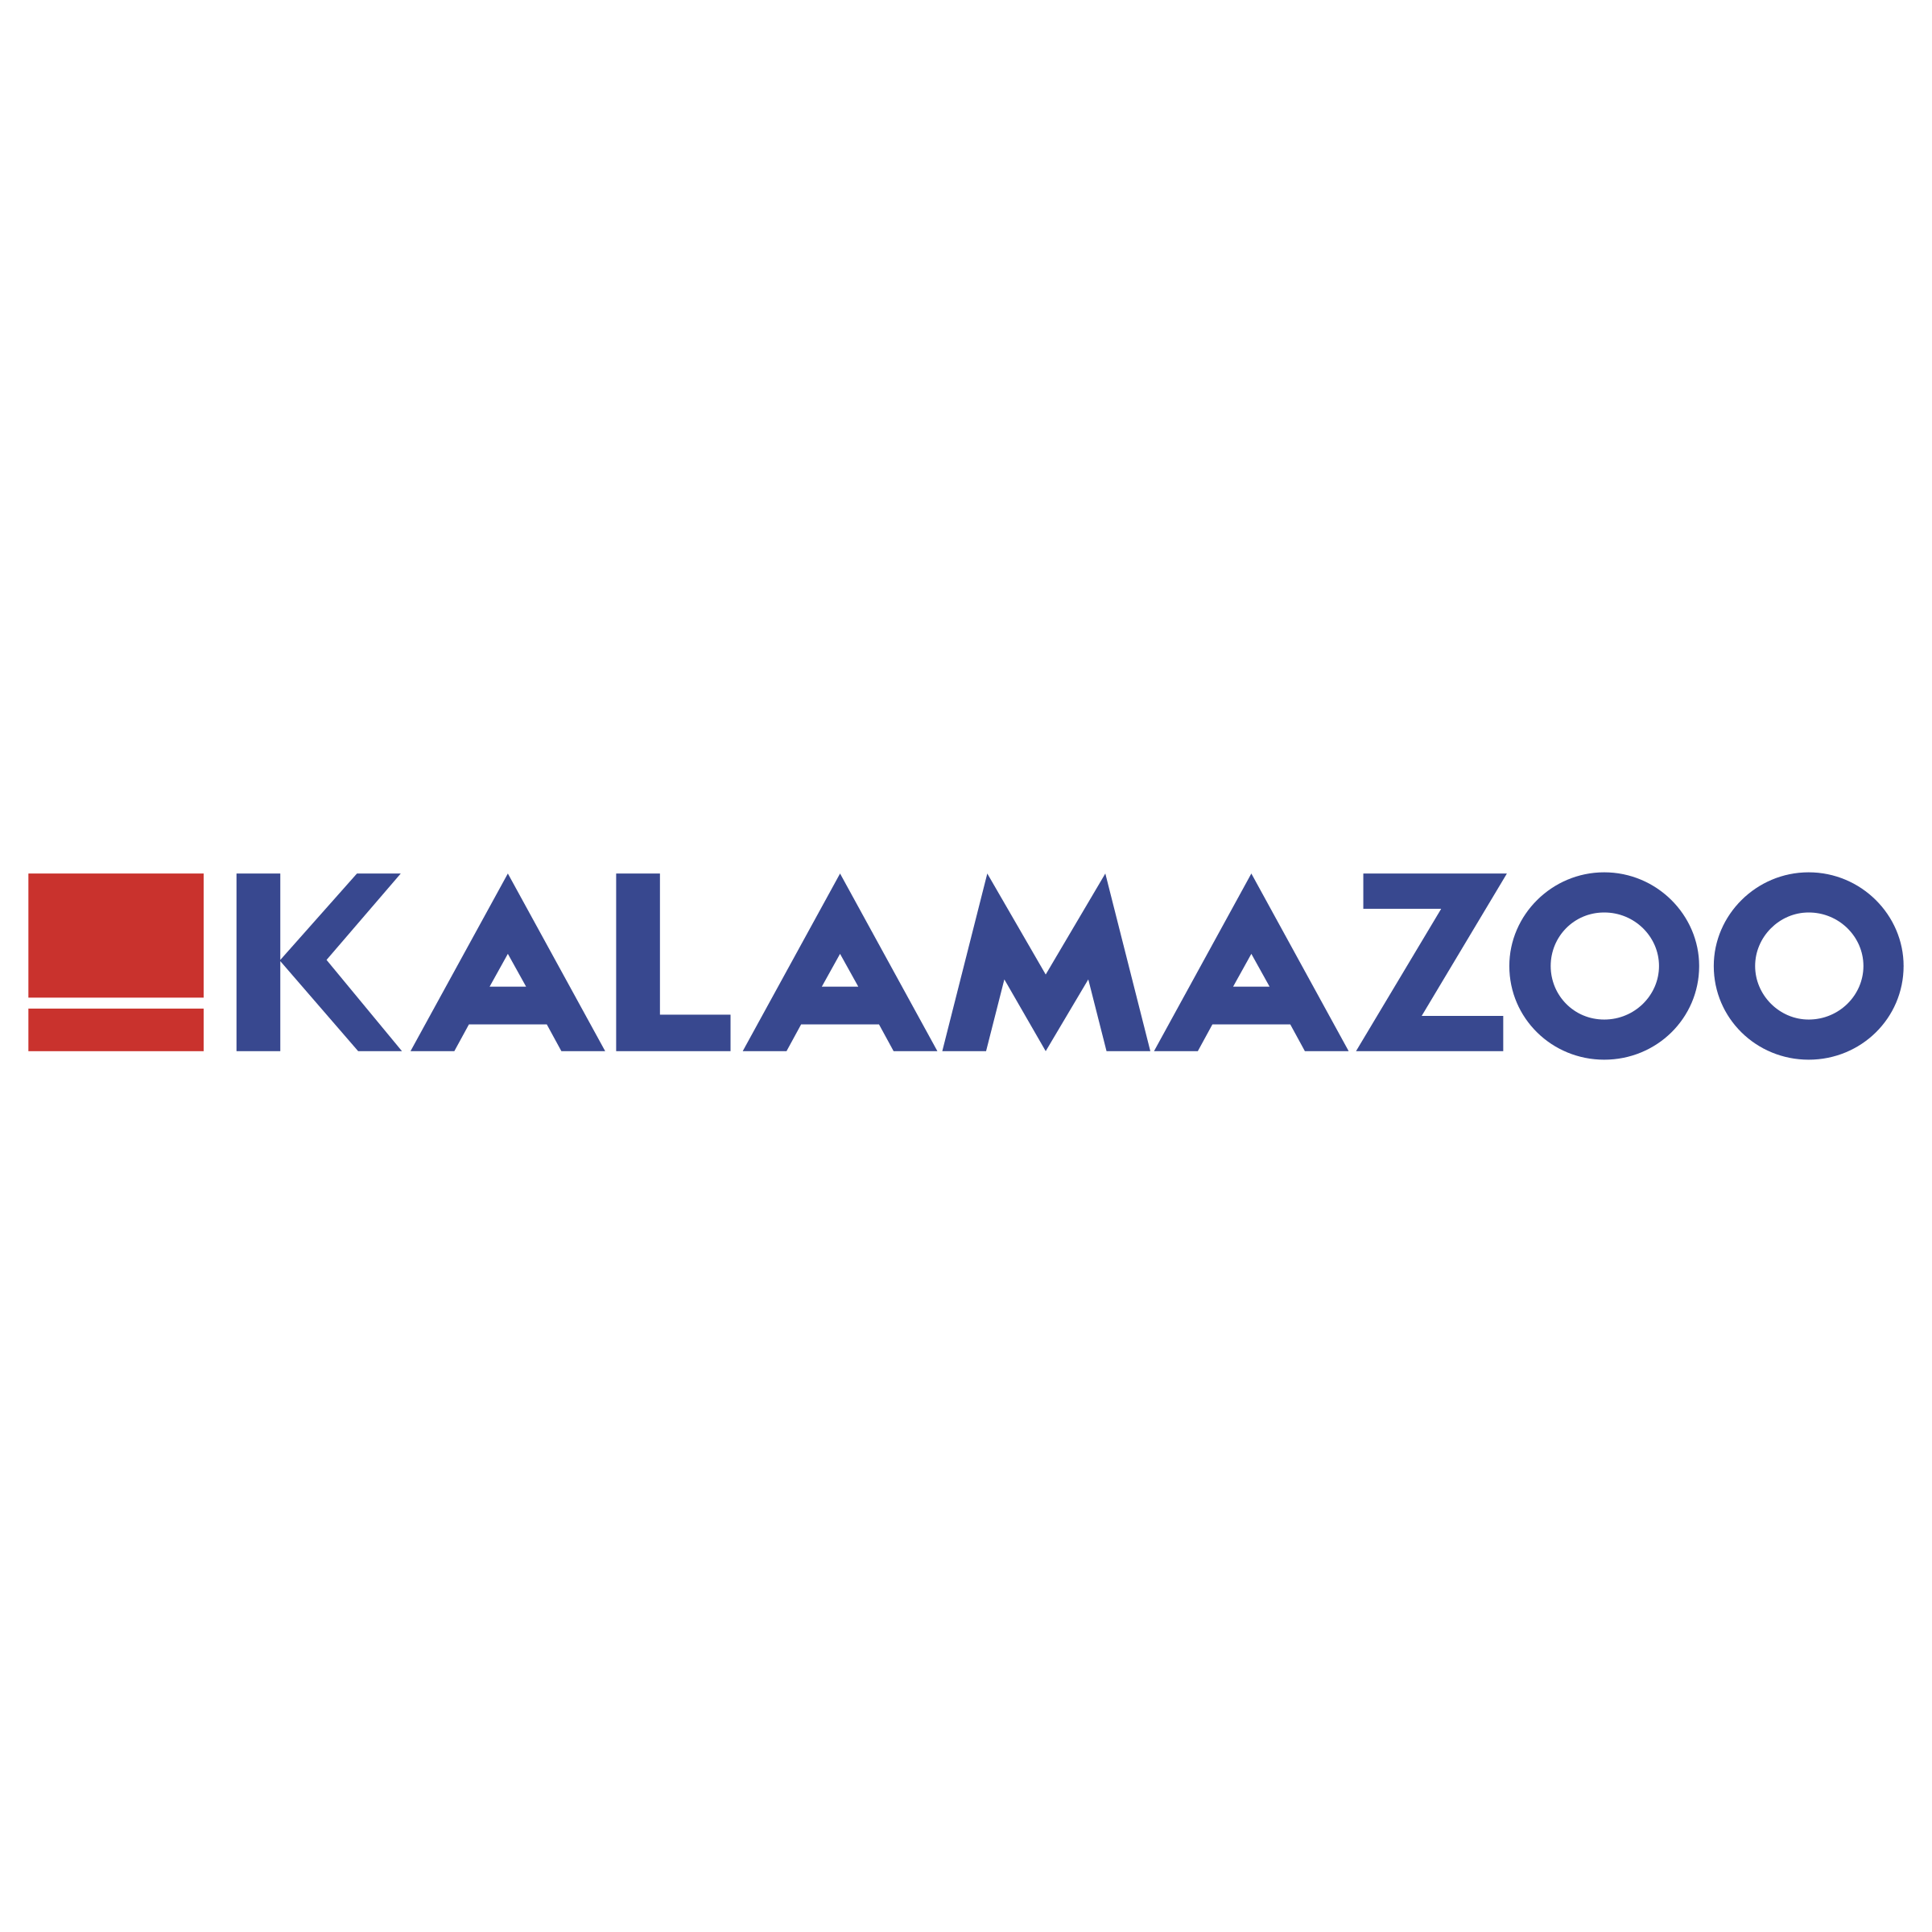 Kalamazoo Logo - Kalamazoo Logo PNG Transparent & SVG Vector - Freebie Supply